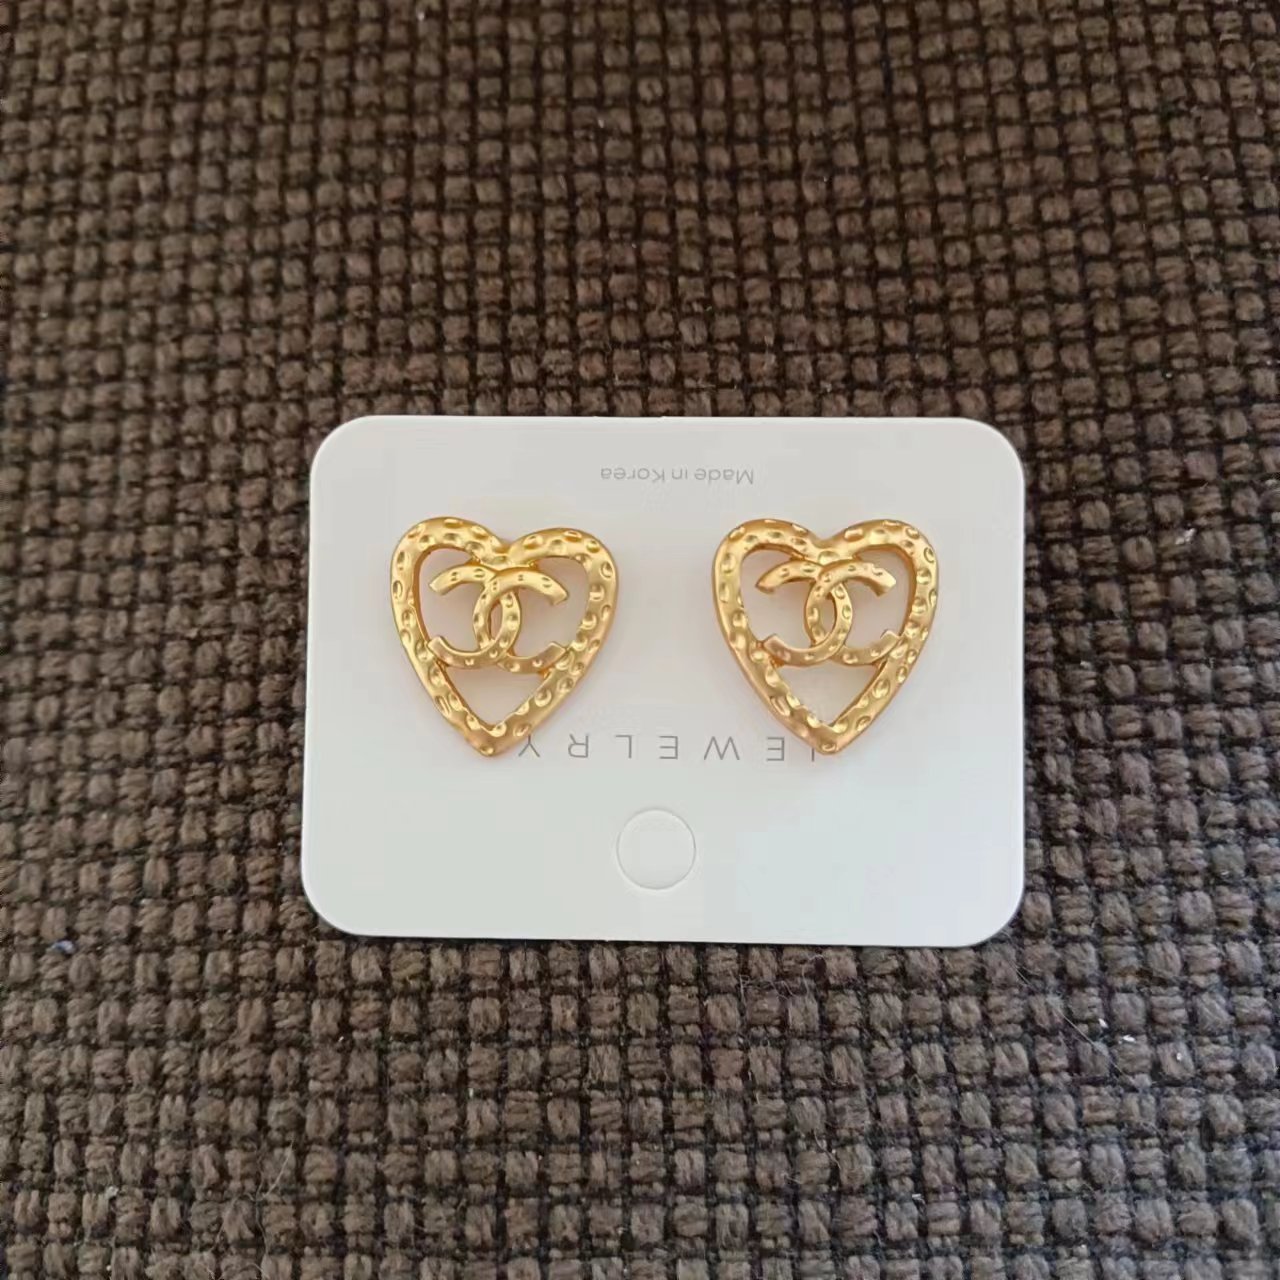 Special sale! New Chanel hollow heart earrings